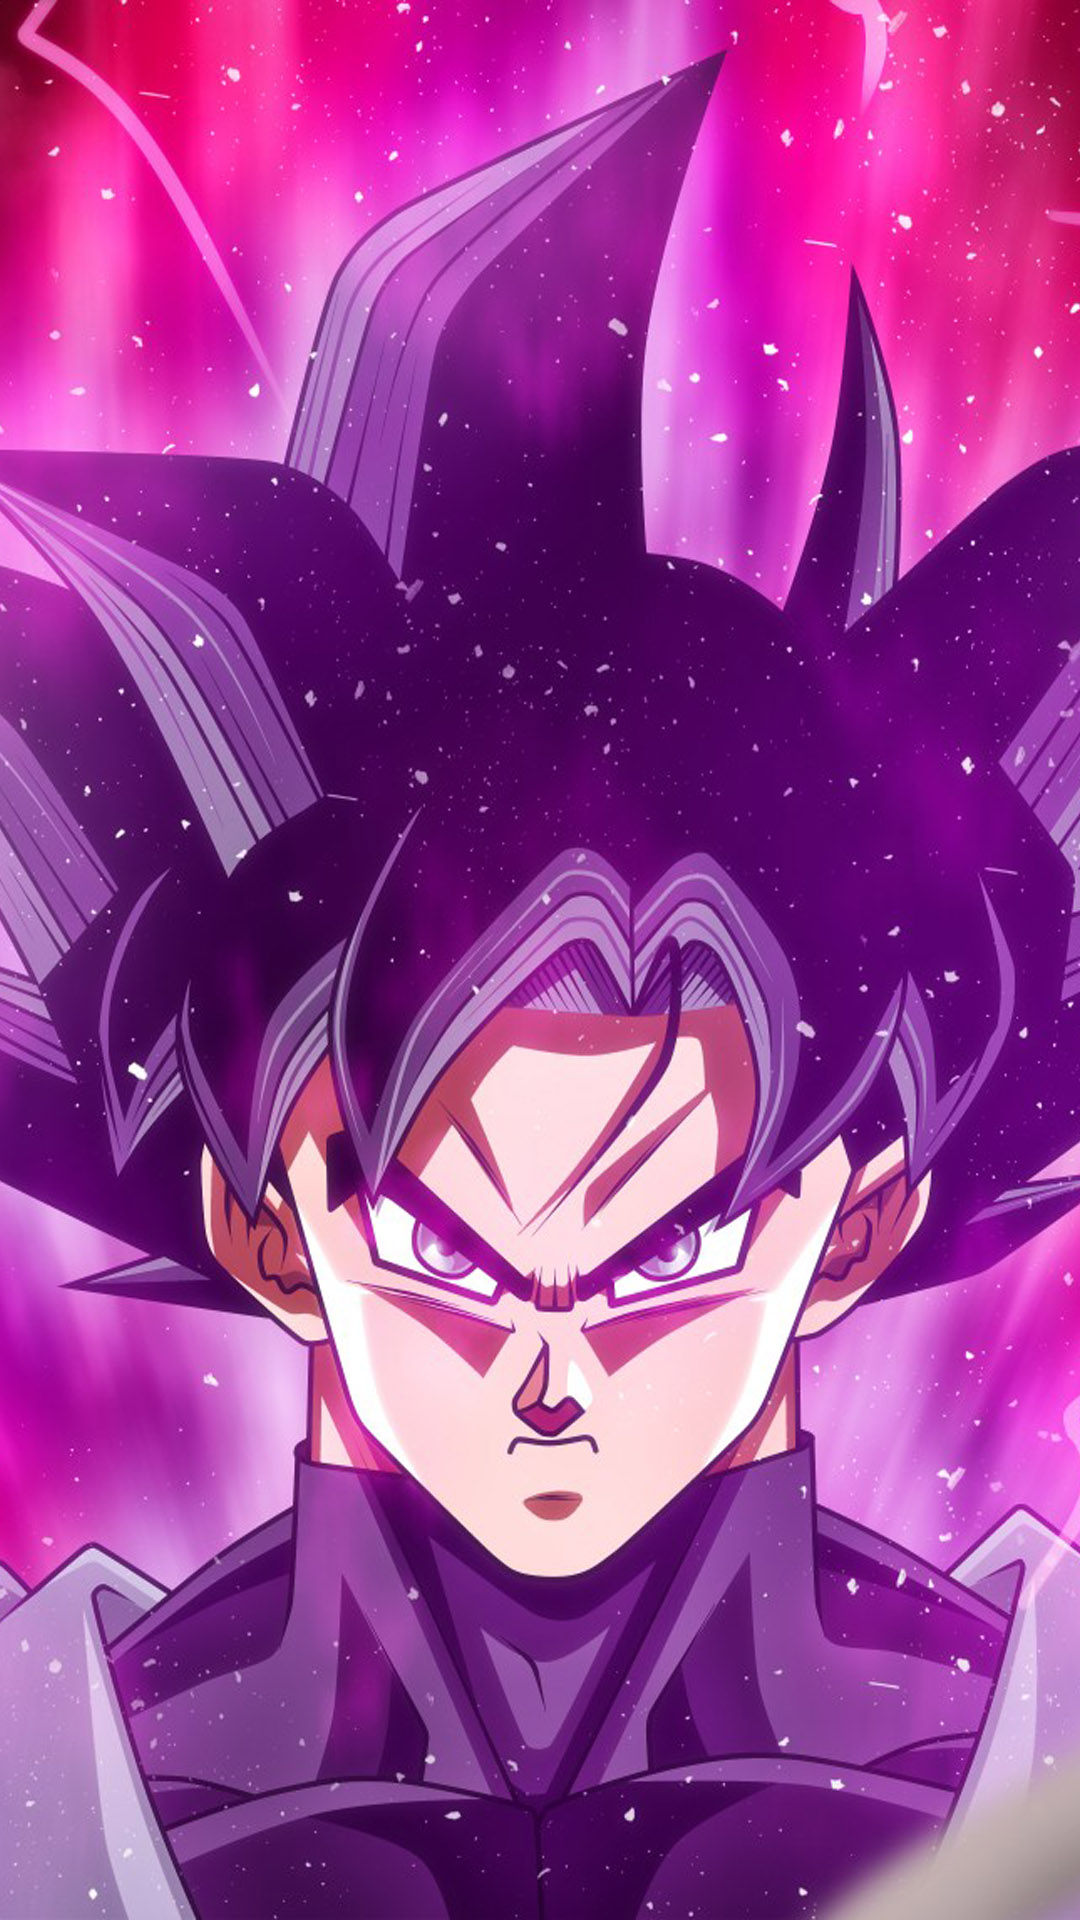 Goku Black Dragon Ball Super Free 4K Ultra HD Mobile Wallpaper